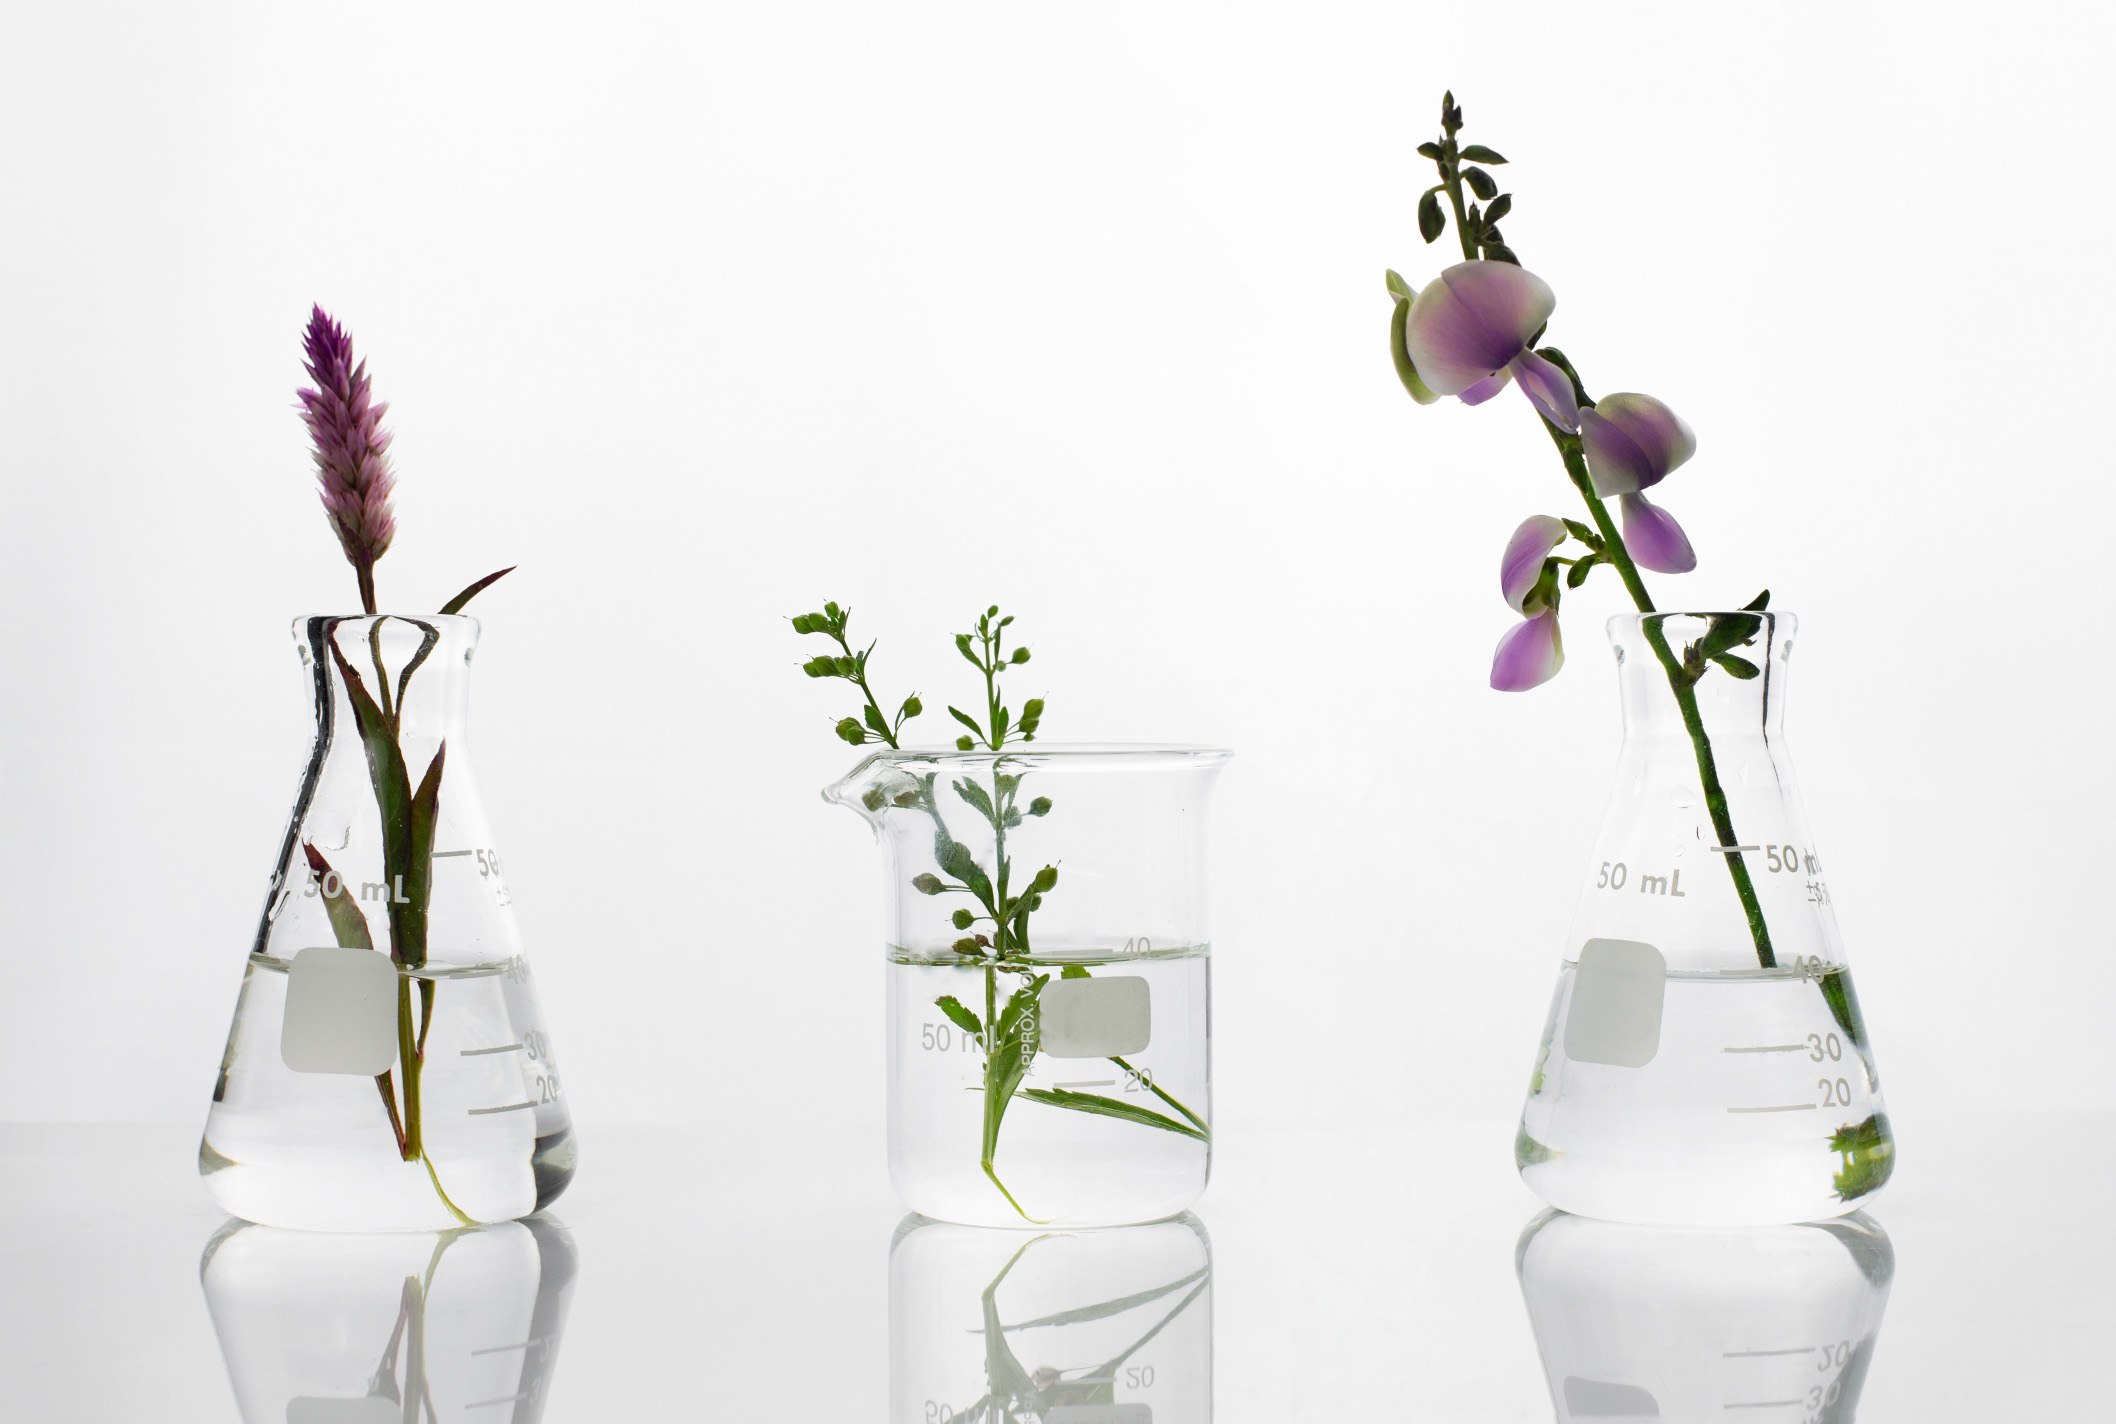 plants in lab glass beakers